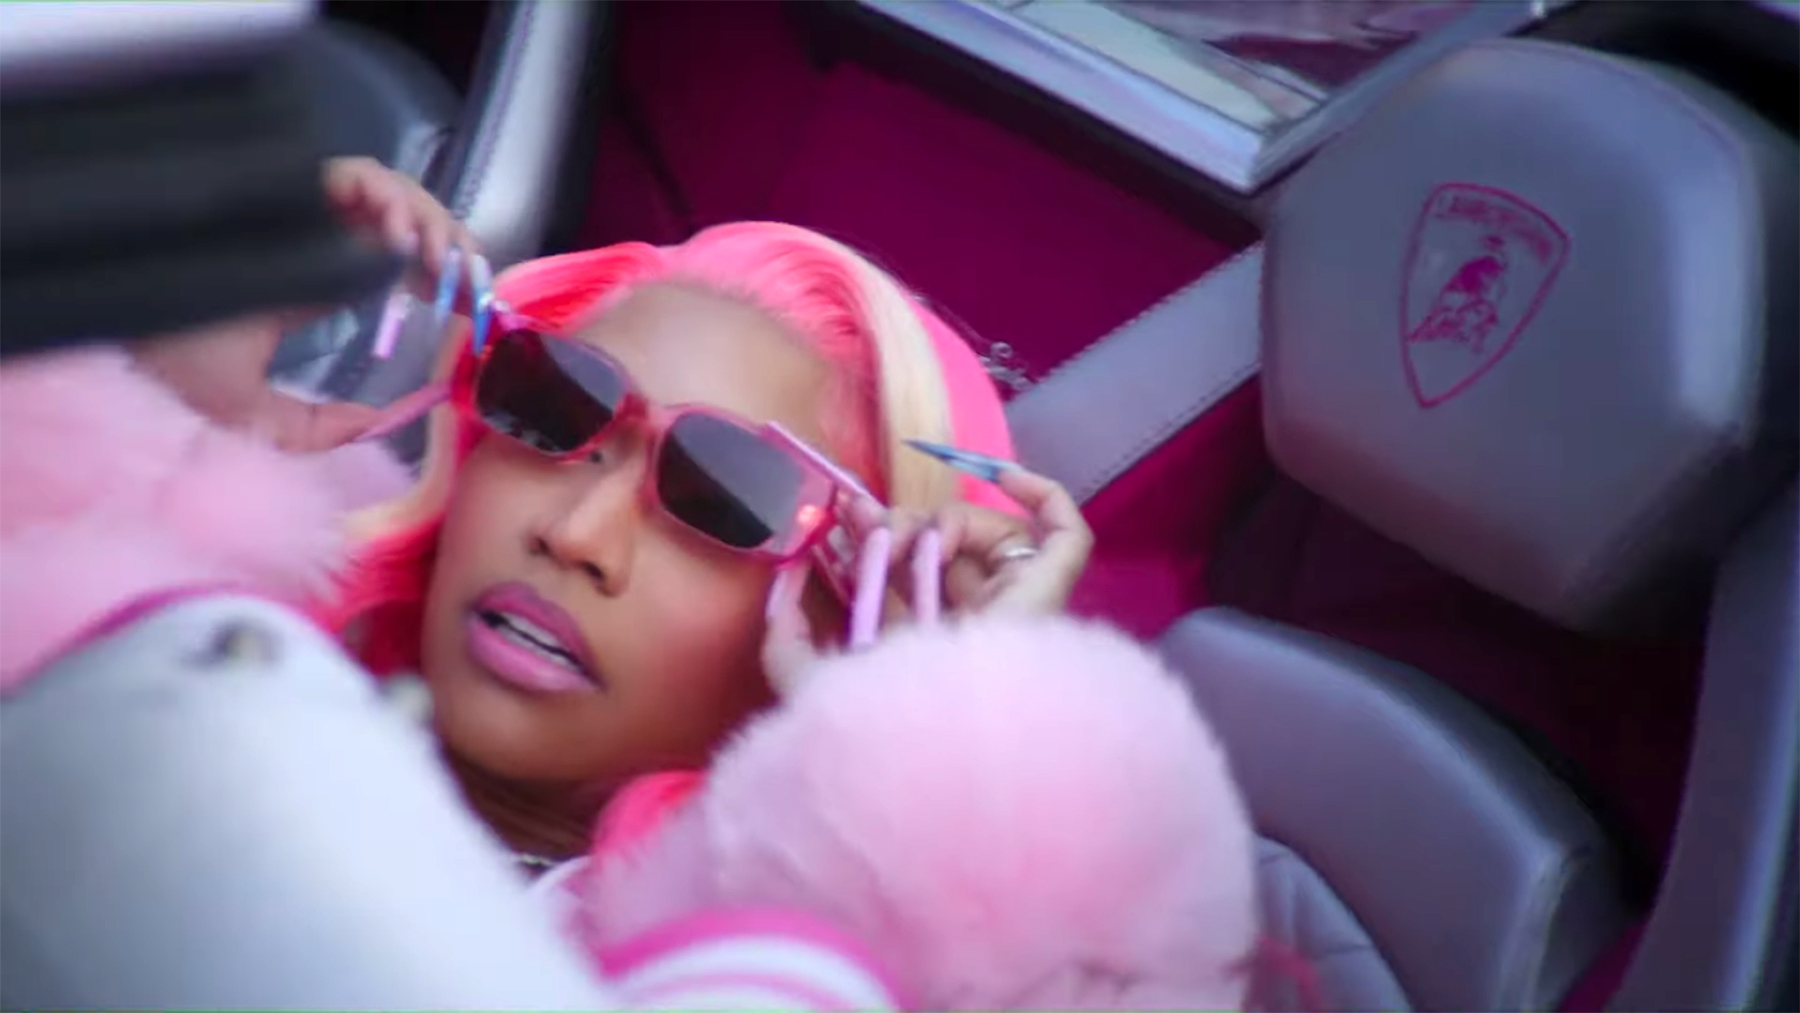 Ник спид. Nicki Minaj - we go up. Up Video.